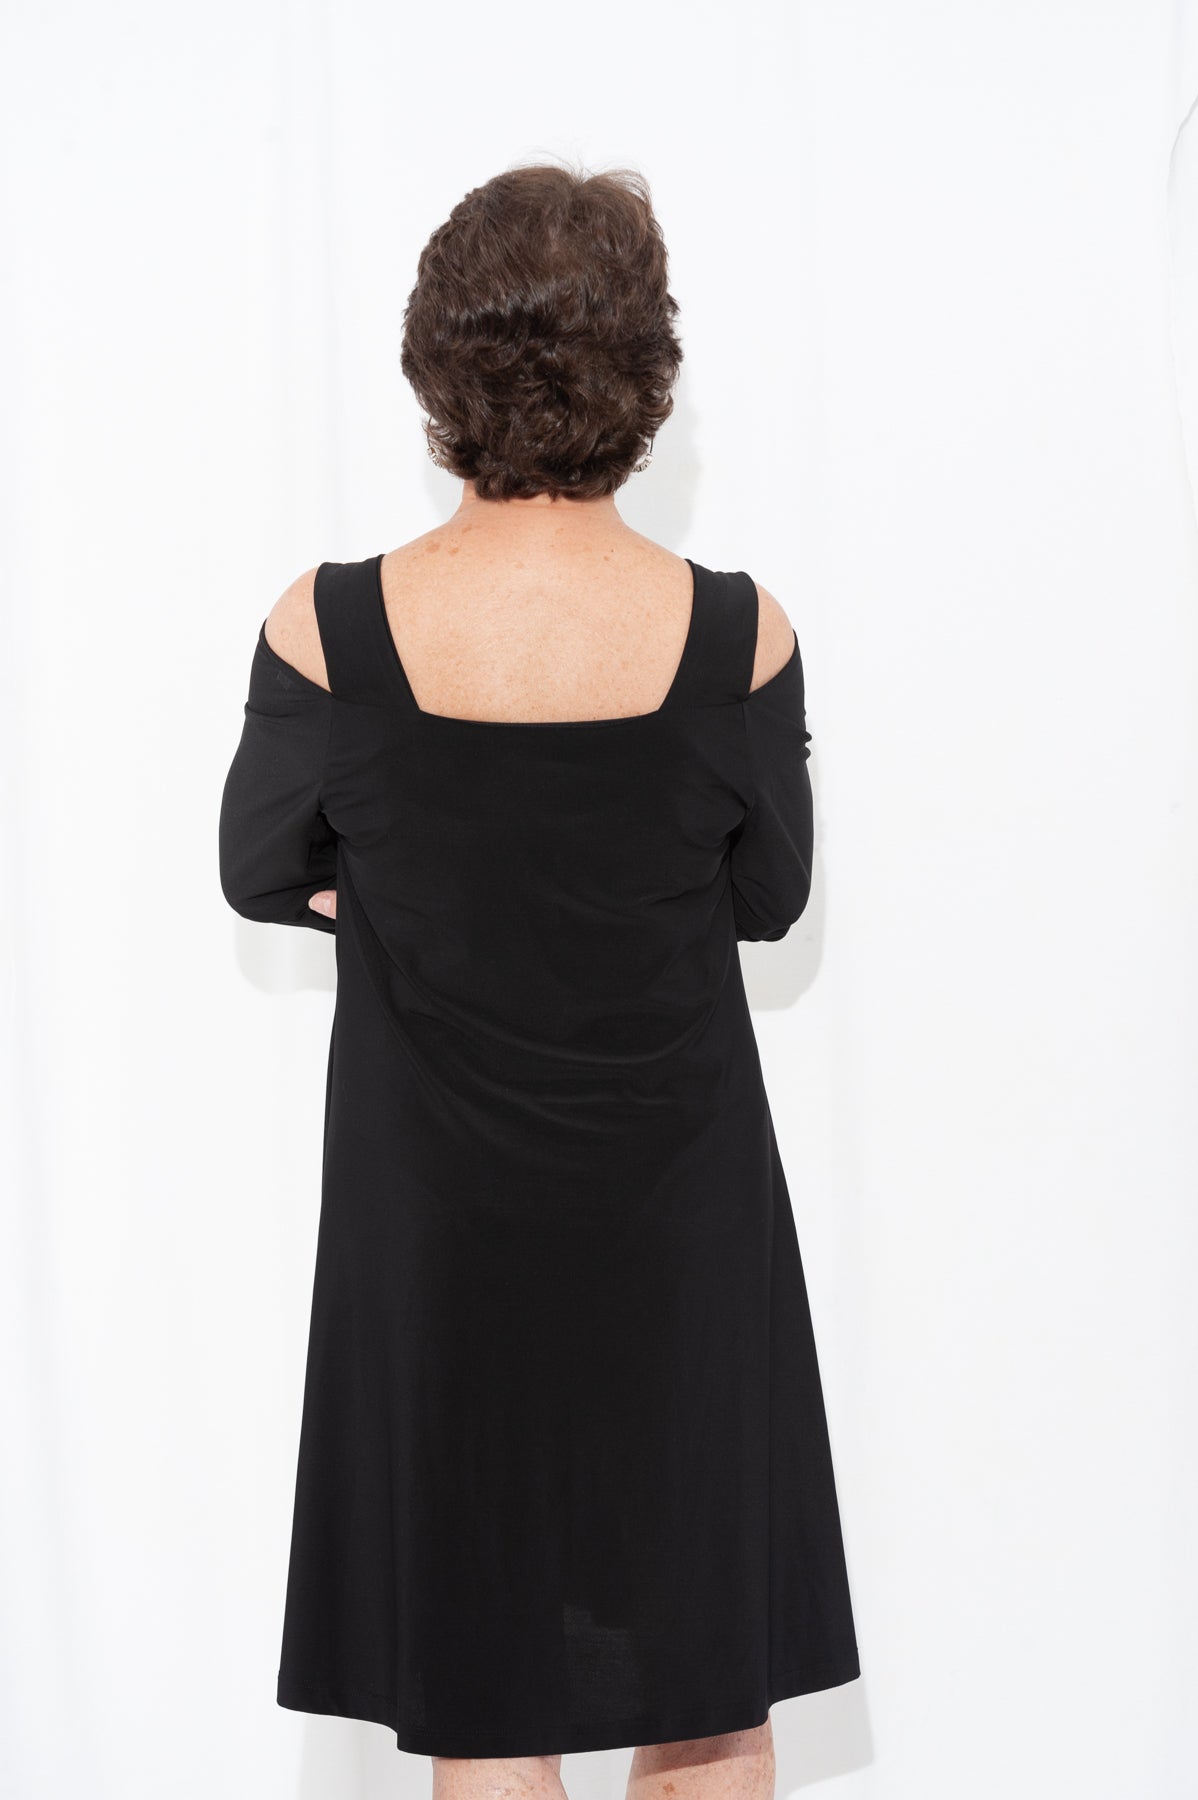 087- Klaveli Black Open Shoulder Dress